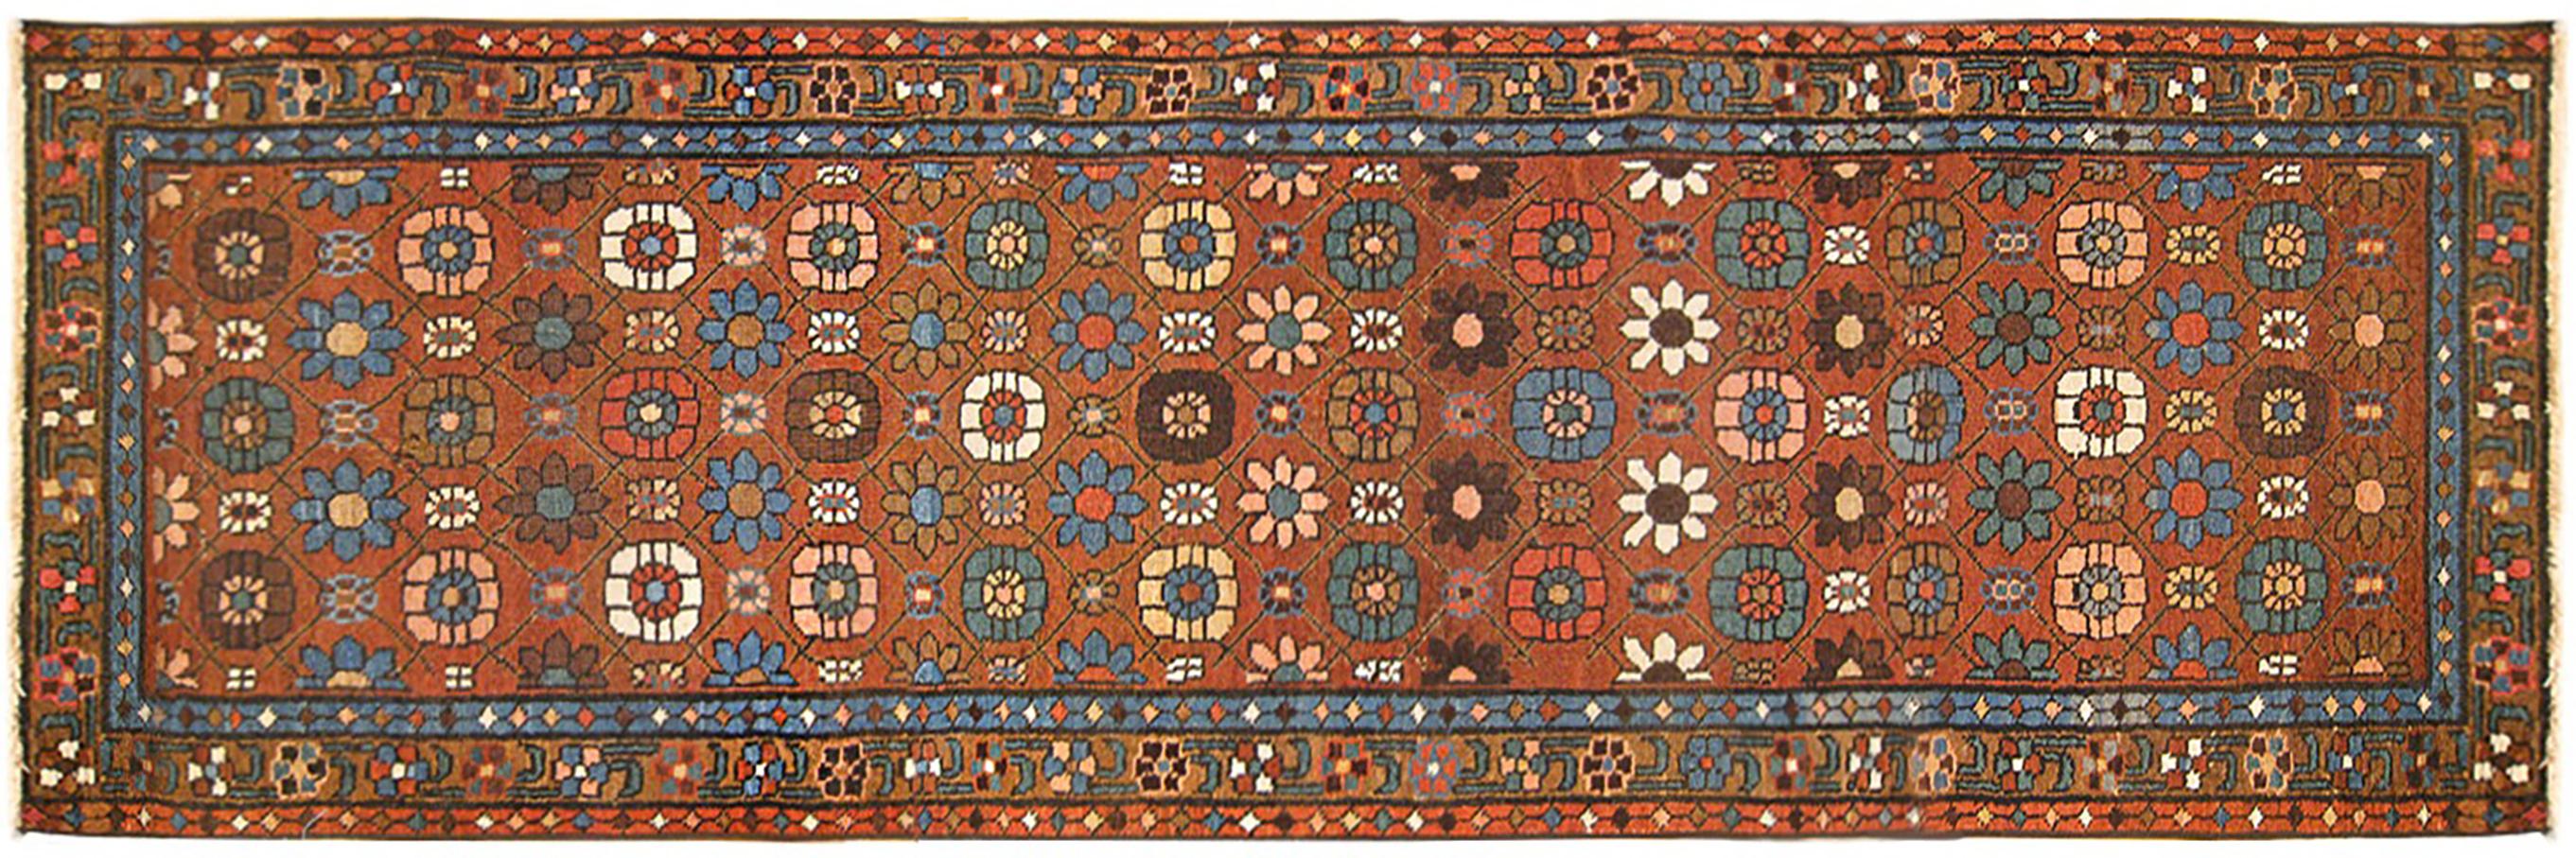 Antique Persian Heriz Oriental Rug, in Runner size, Repeating Flower Head Design For Sale